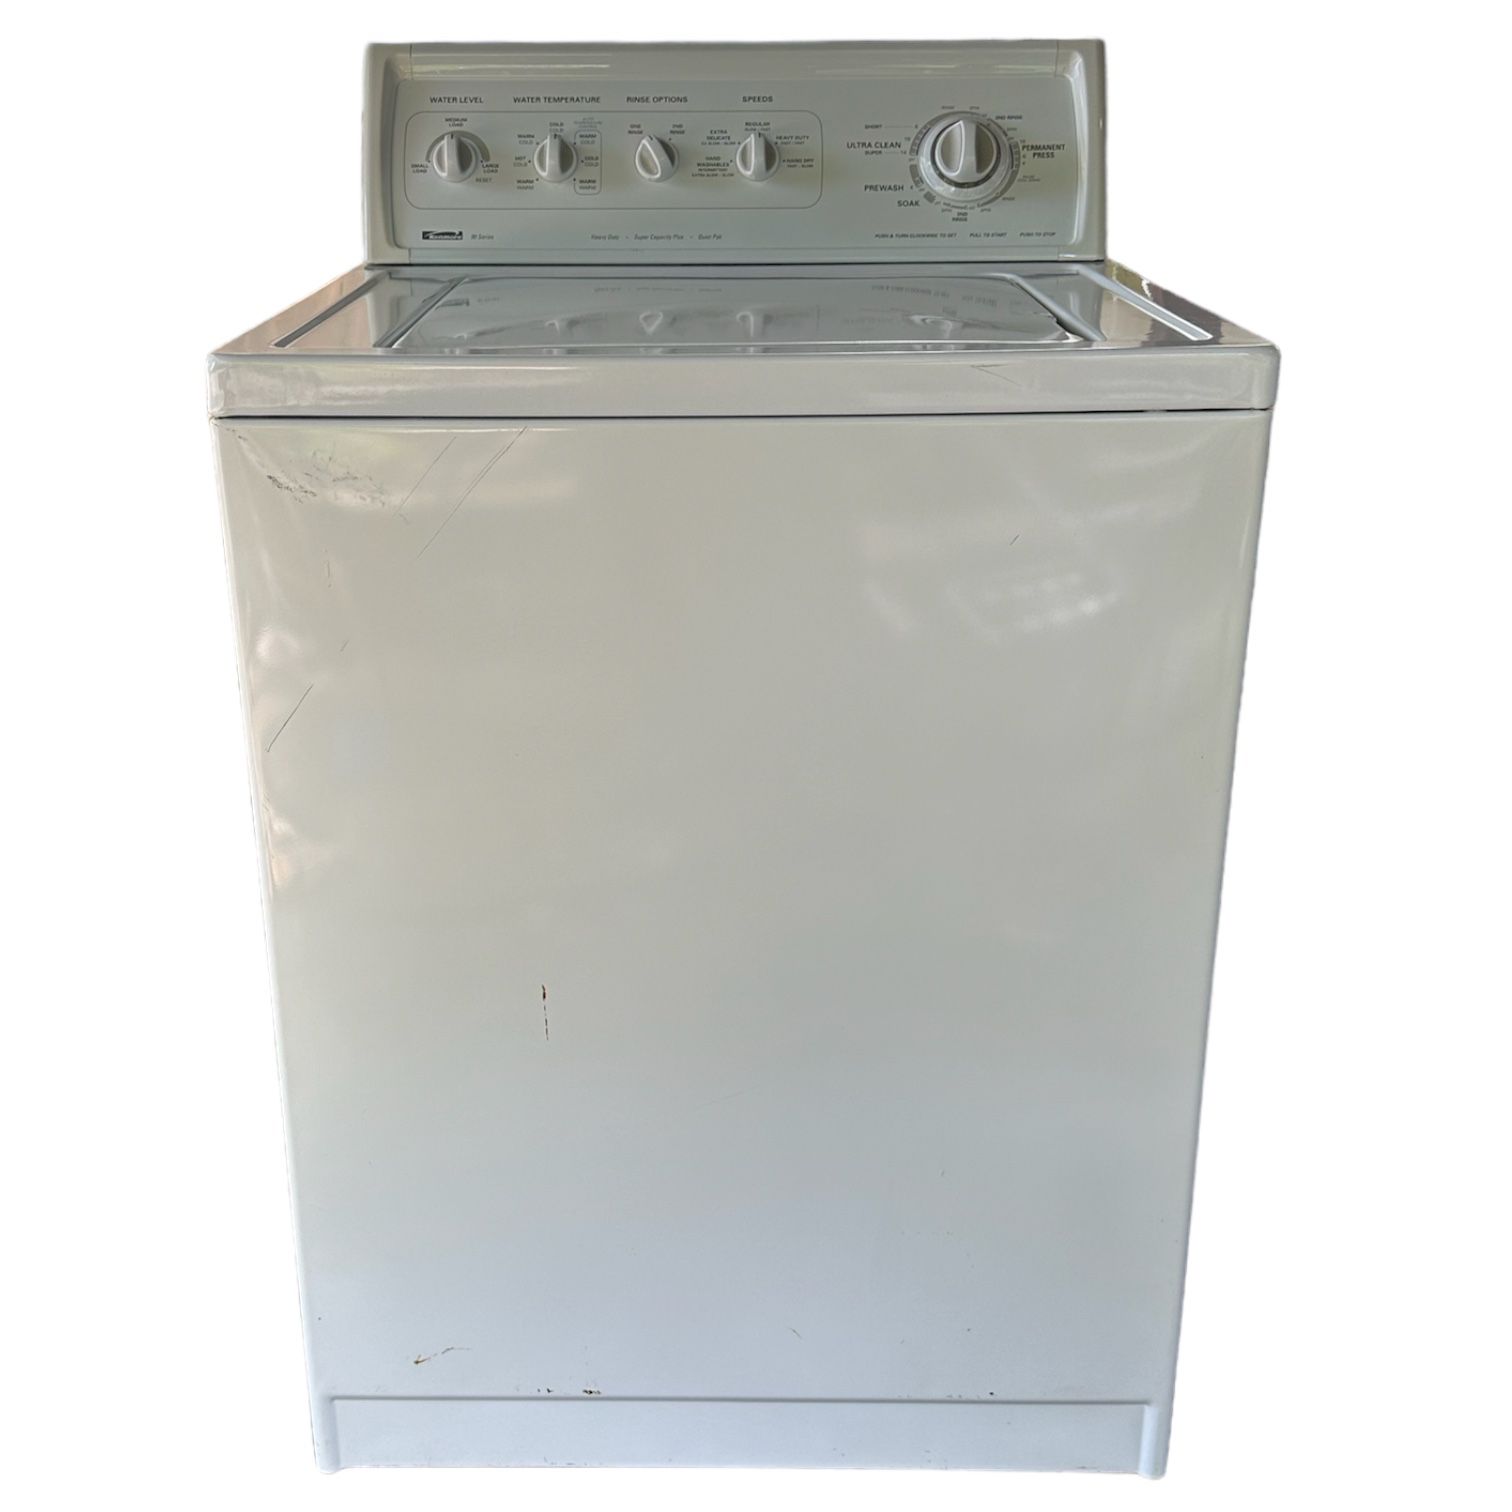 Washing Machine - Kenmore 90 Series Washer